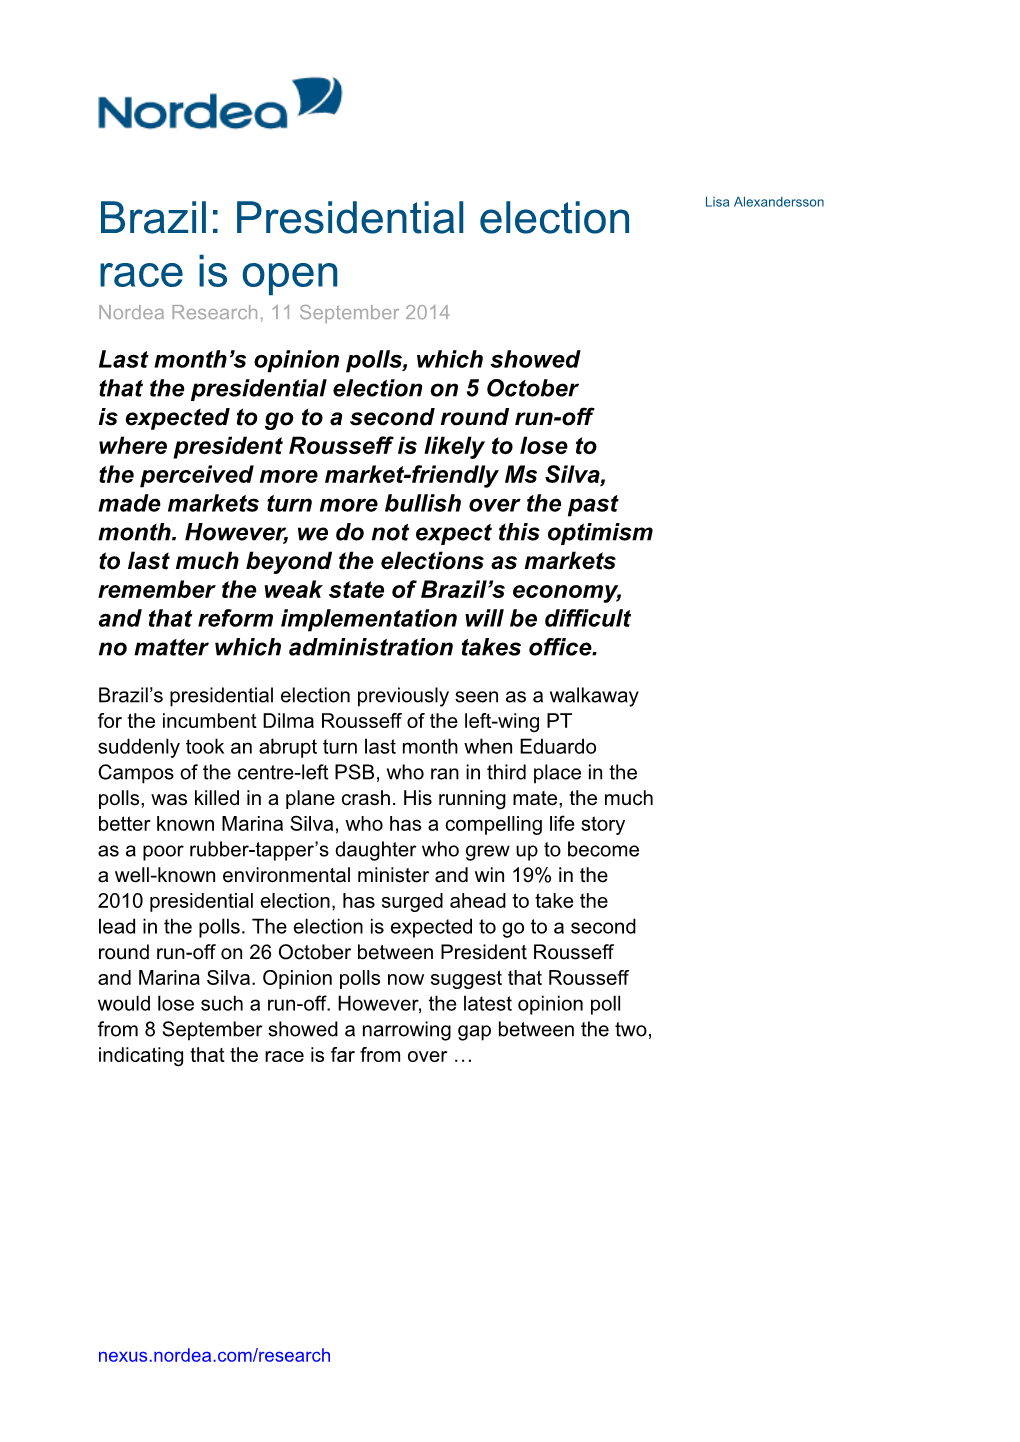 Brazil: Presidential Election Race Is Open Nordea Research, 11 September 2014